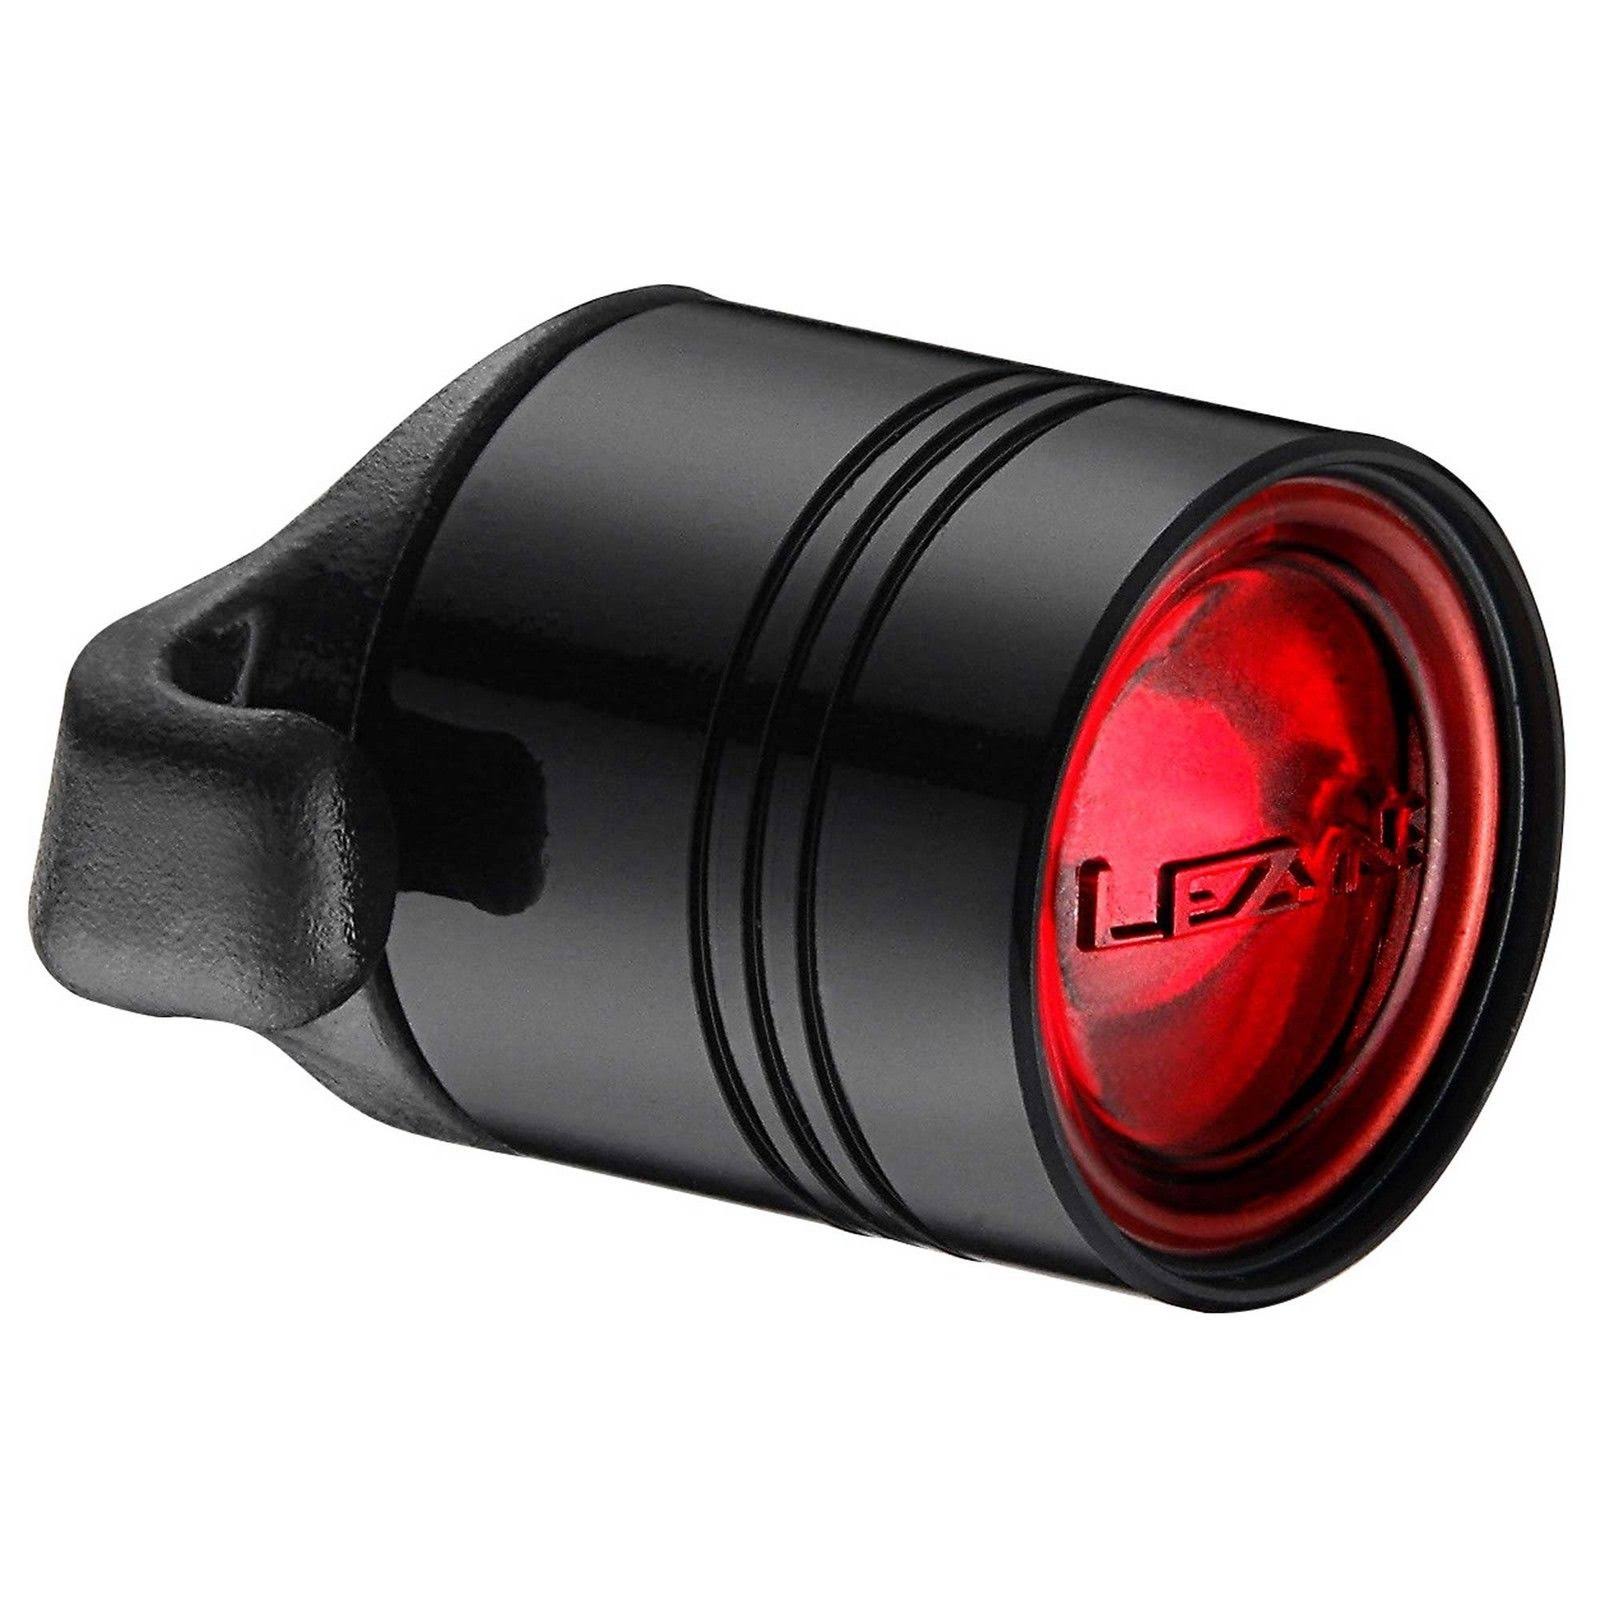 Lezyne Femto Drive LED Rear Light - Black